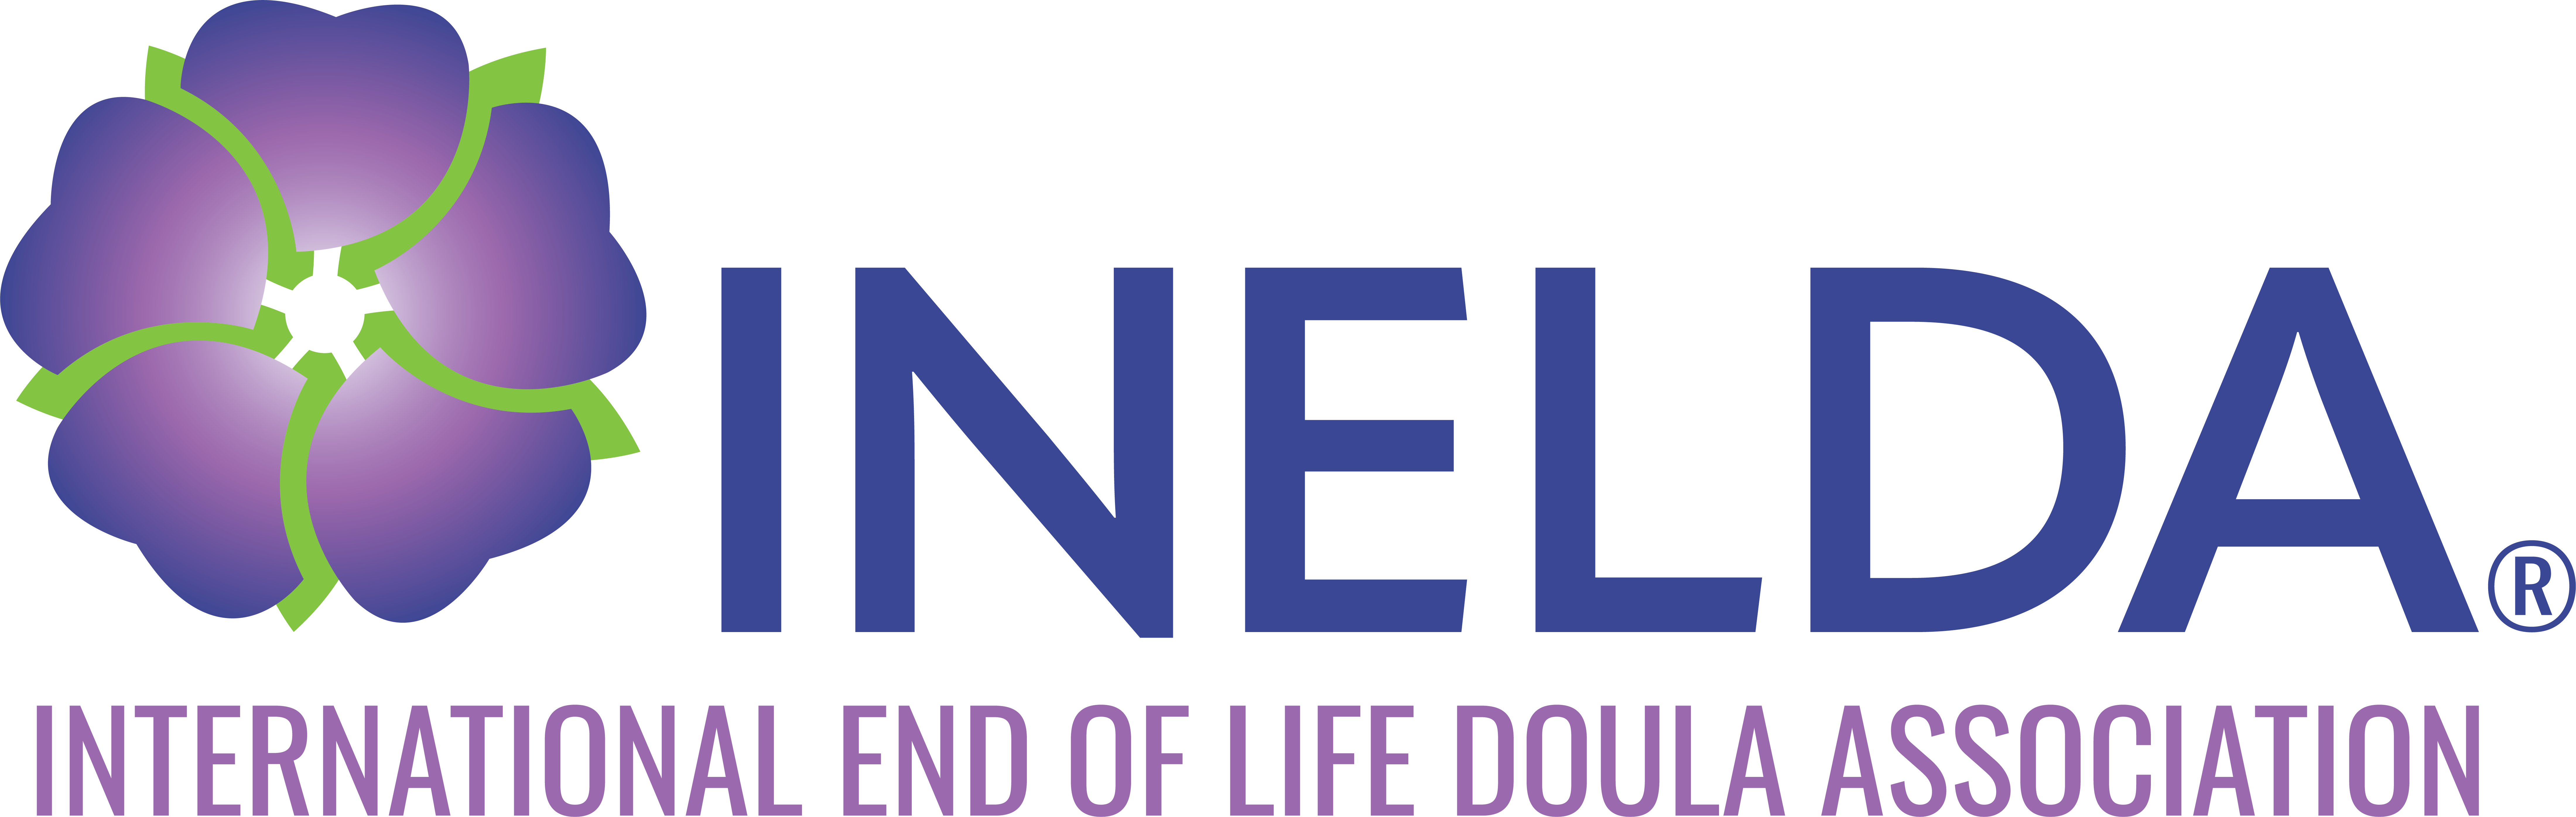 International End-of-Life Doula Association - INELDA Logo